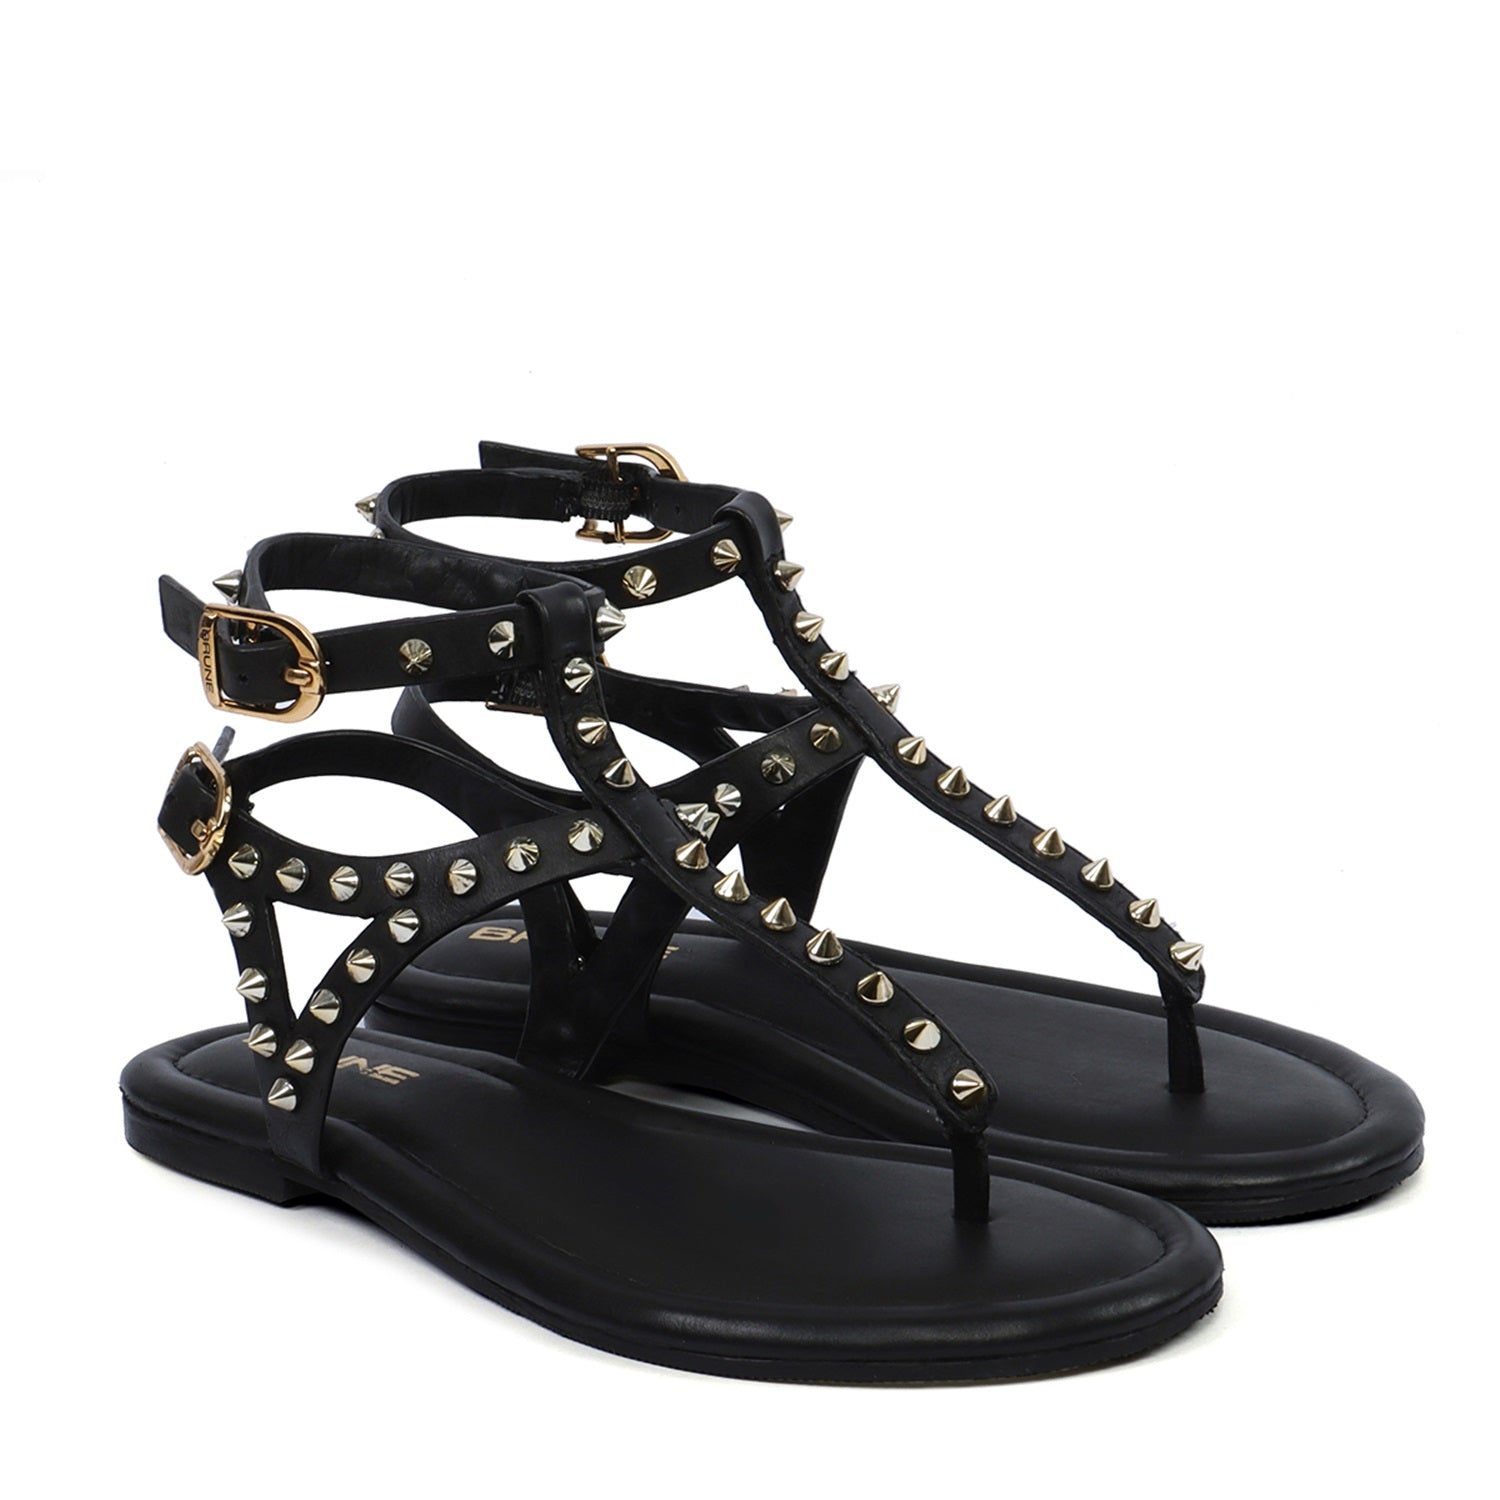 Mystique BLACK Patent Leather Gladiator Sandal w Gold Studs! 7